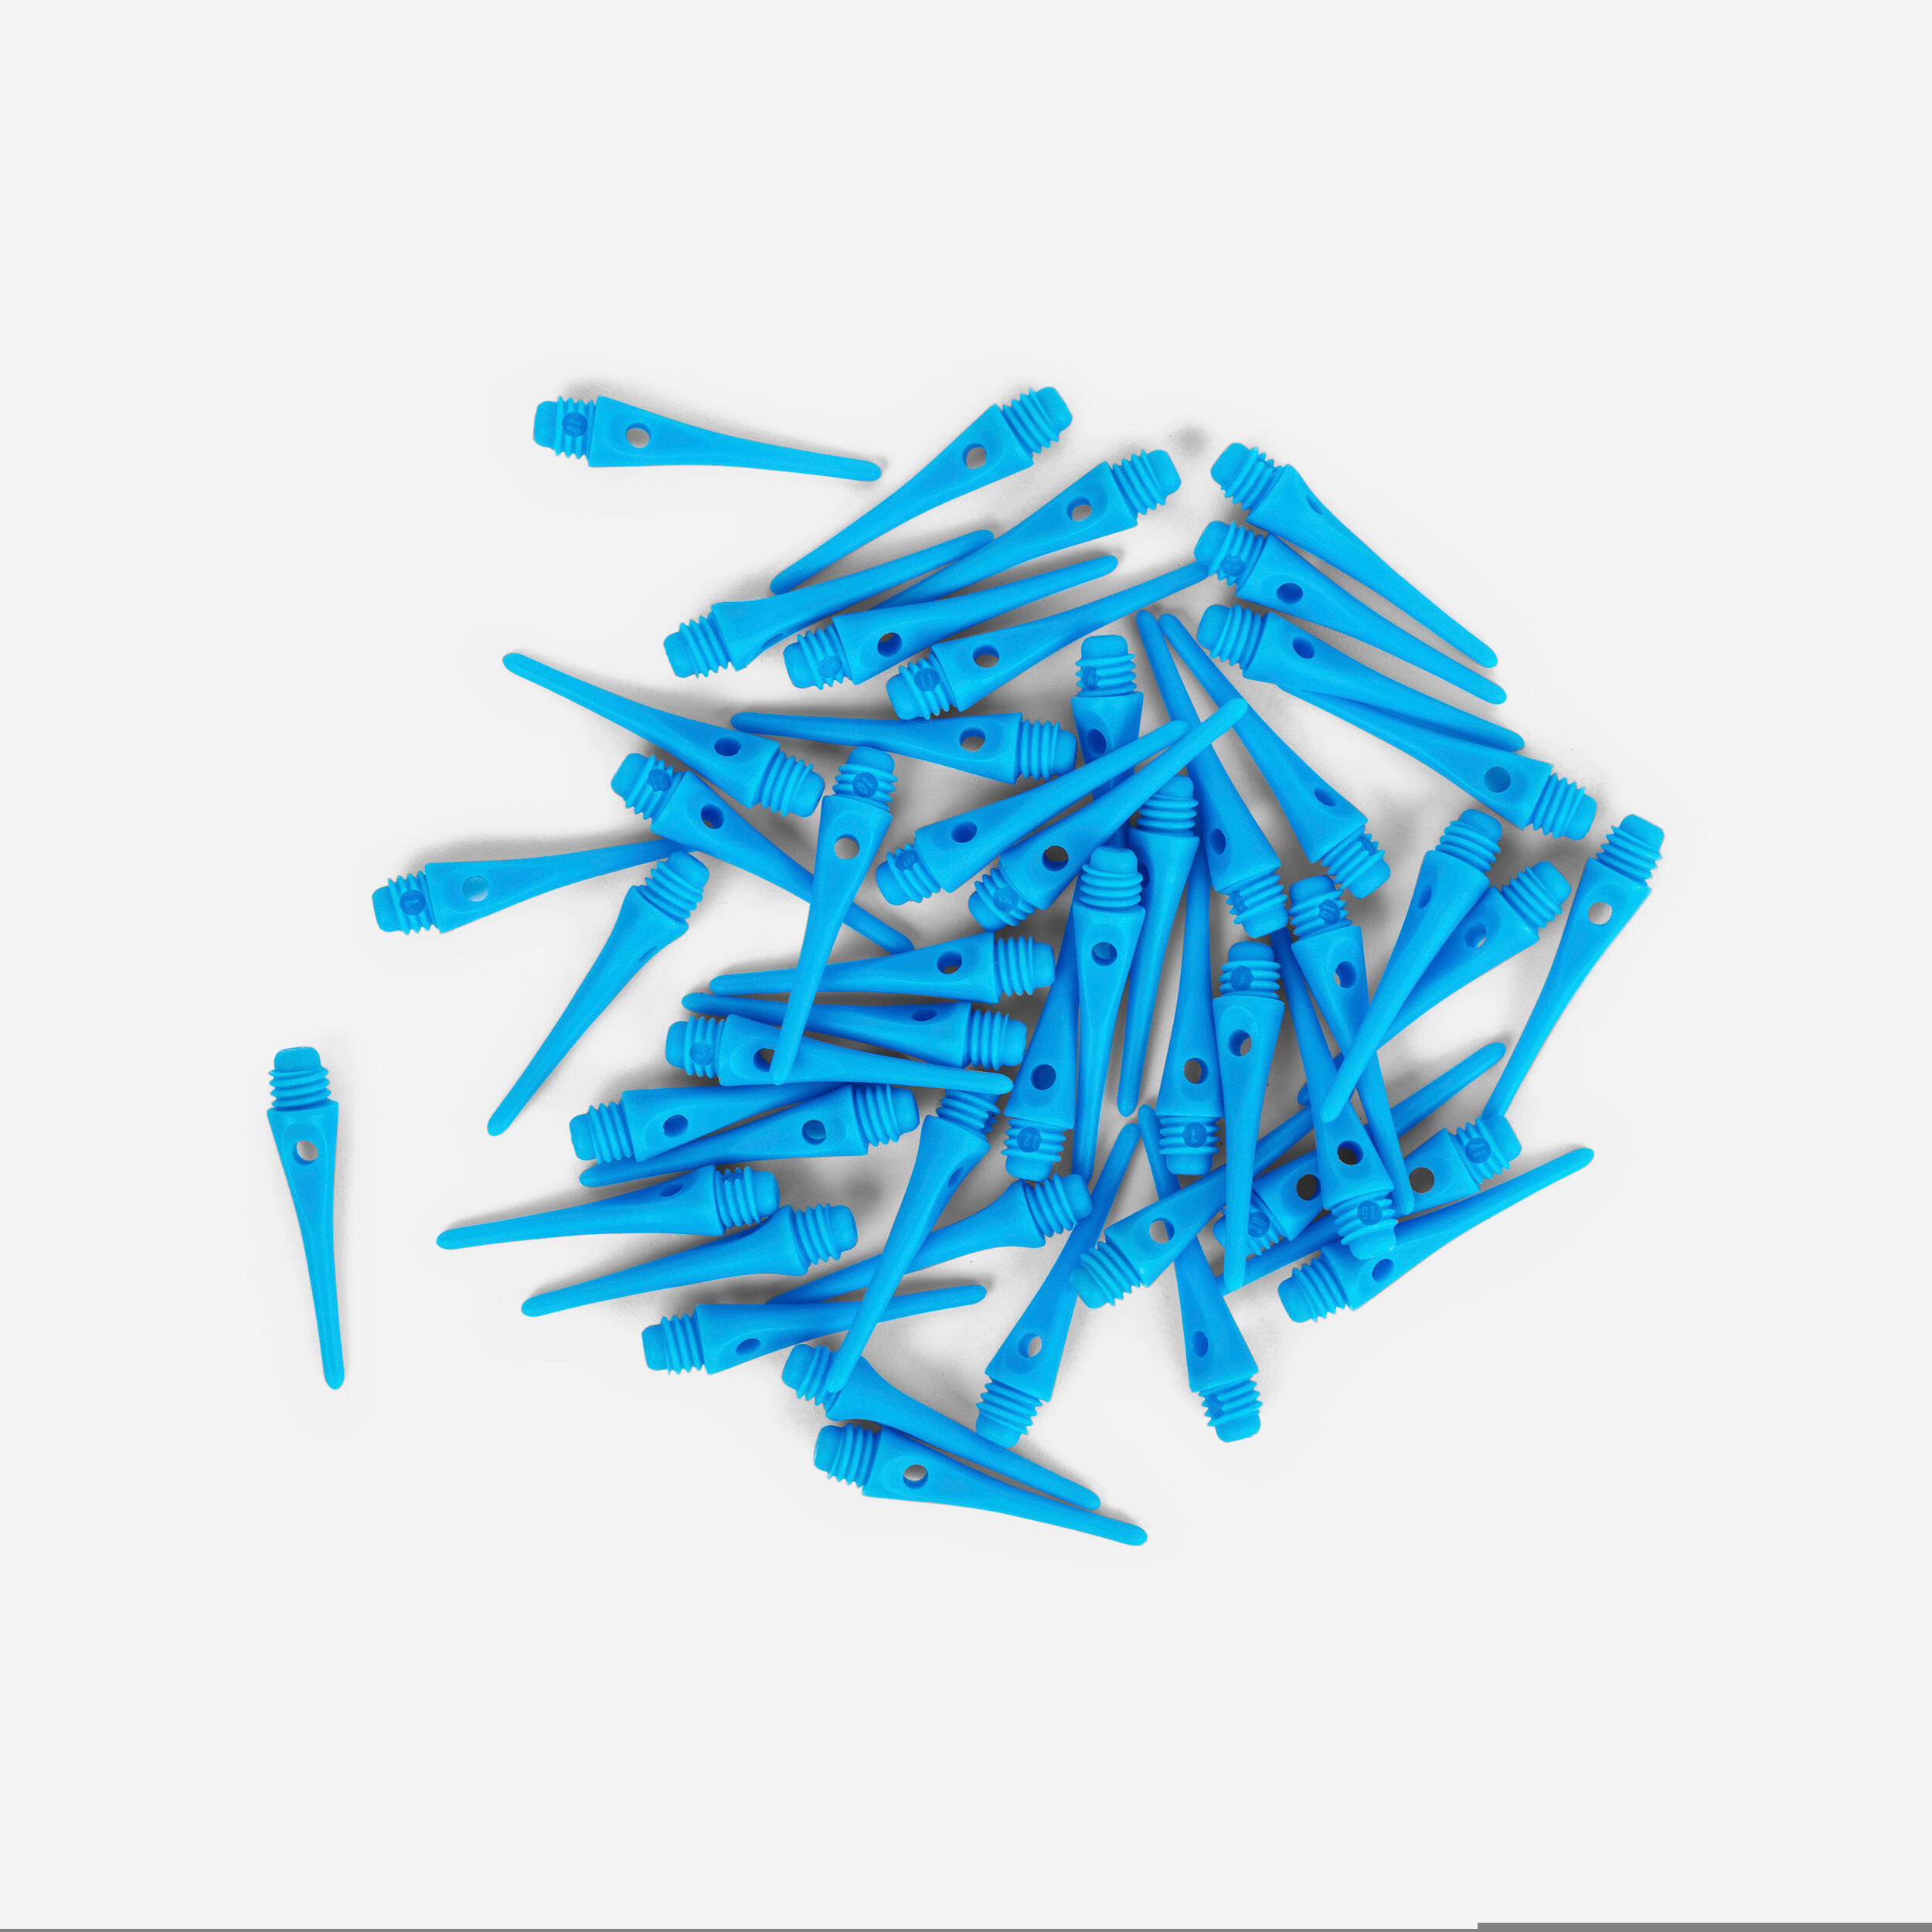 Vârfuri săgeți plastic Soft tip Albastru X50 decathlon.ro Accesorii Darts